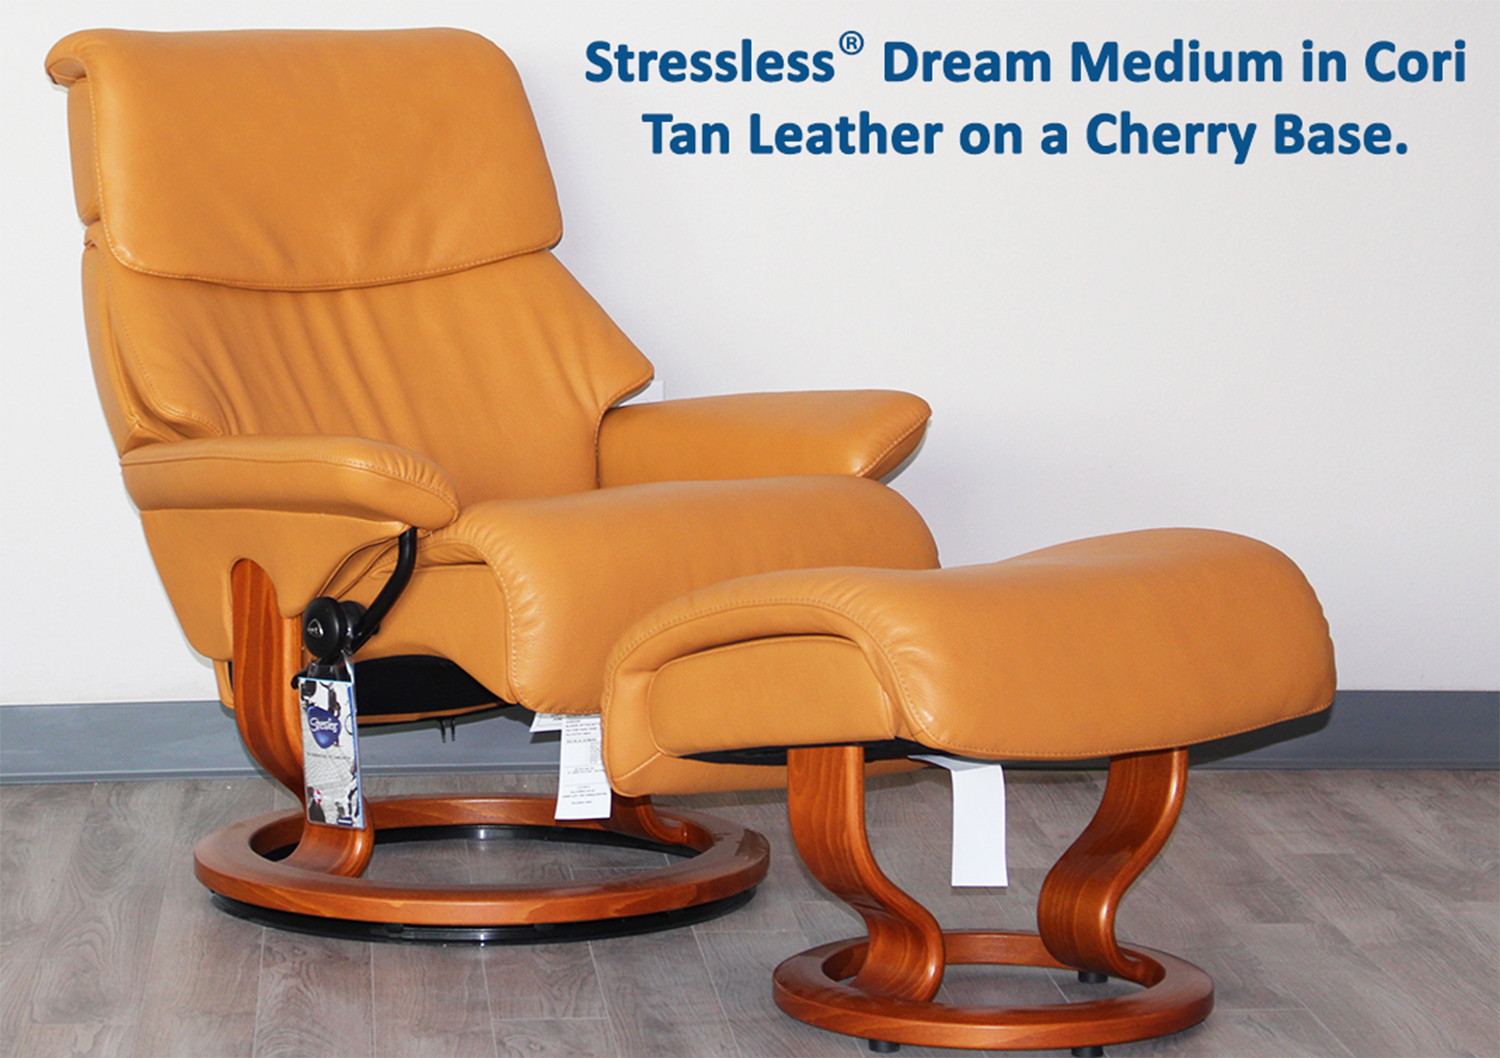 Stressless Dream Medium Cori - by Stressless Medium Leather Cori Ekornes Leather Chairs Dream Recliners Tan Tan